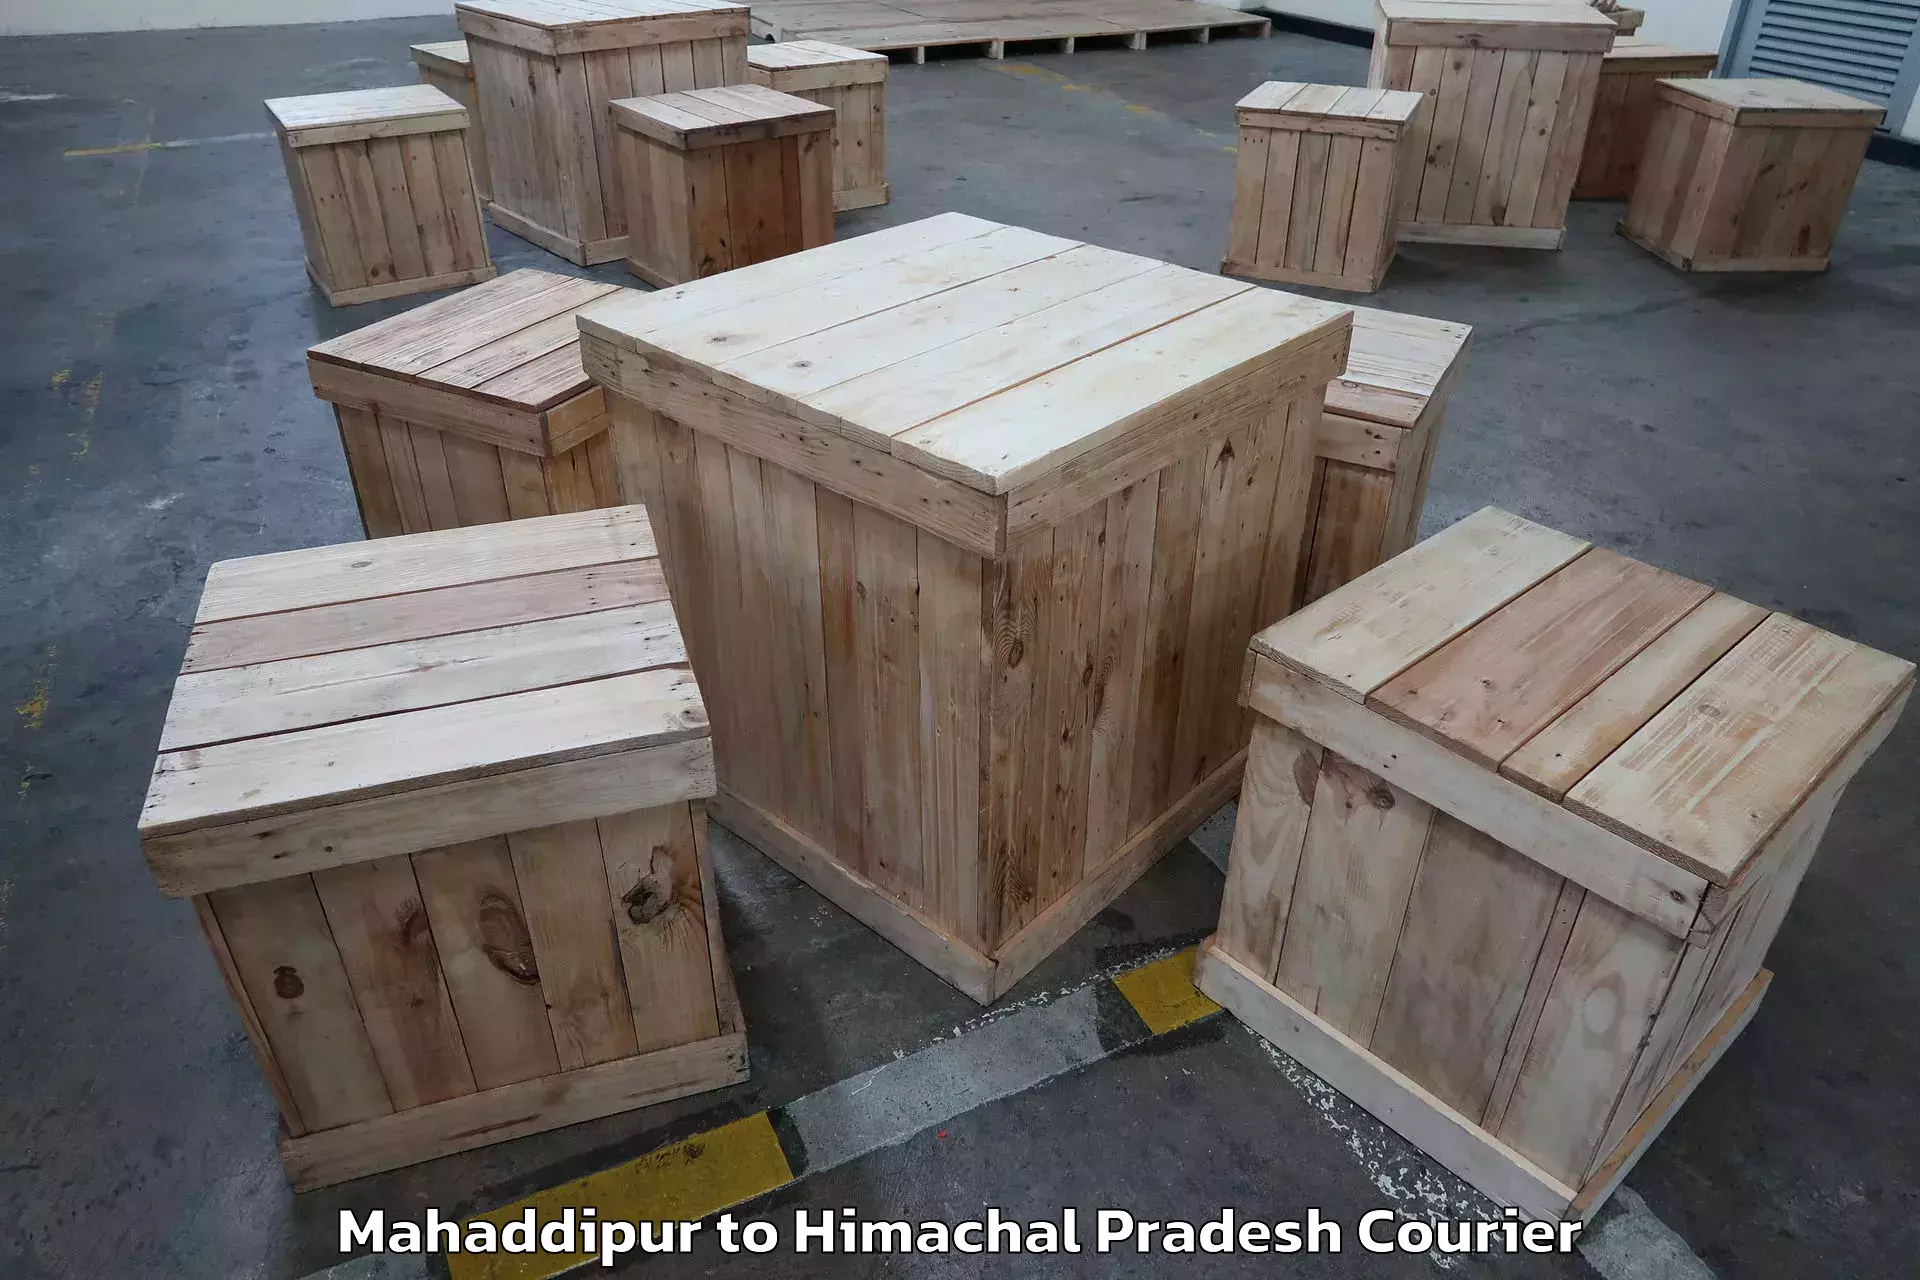 Specialized moving company Mahaddipur to Joginder Nagar